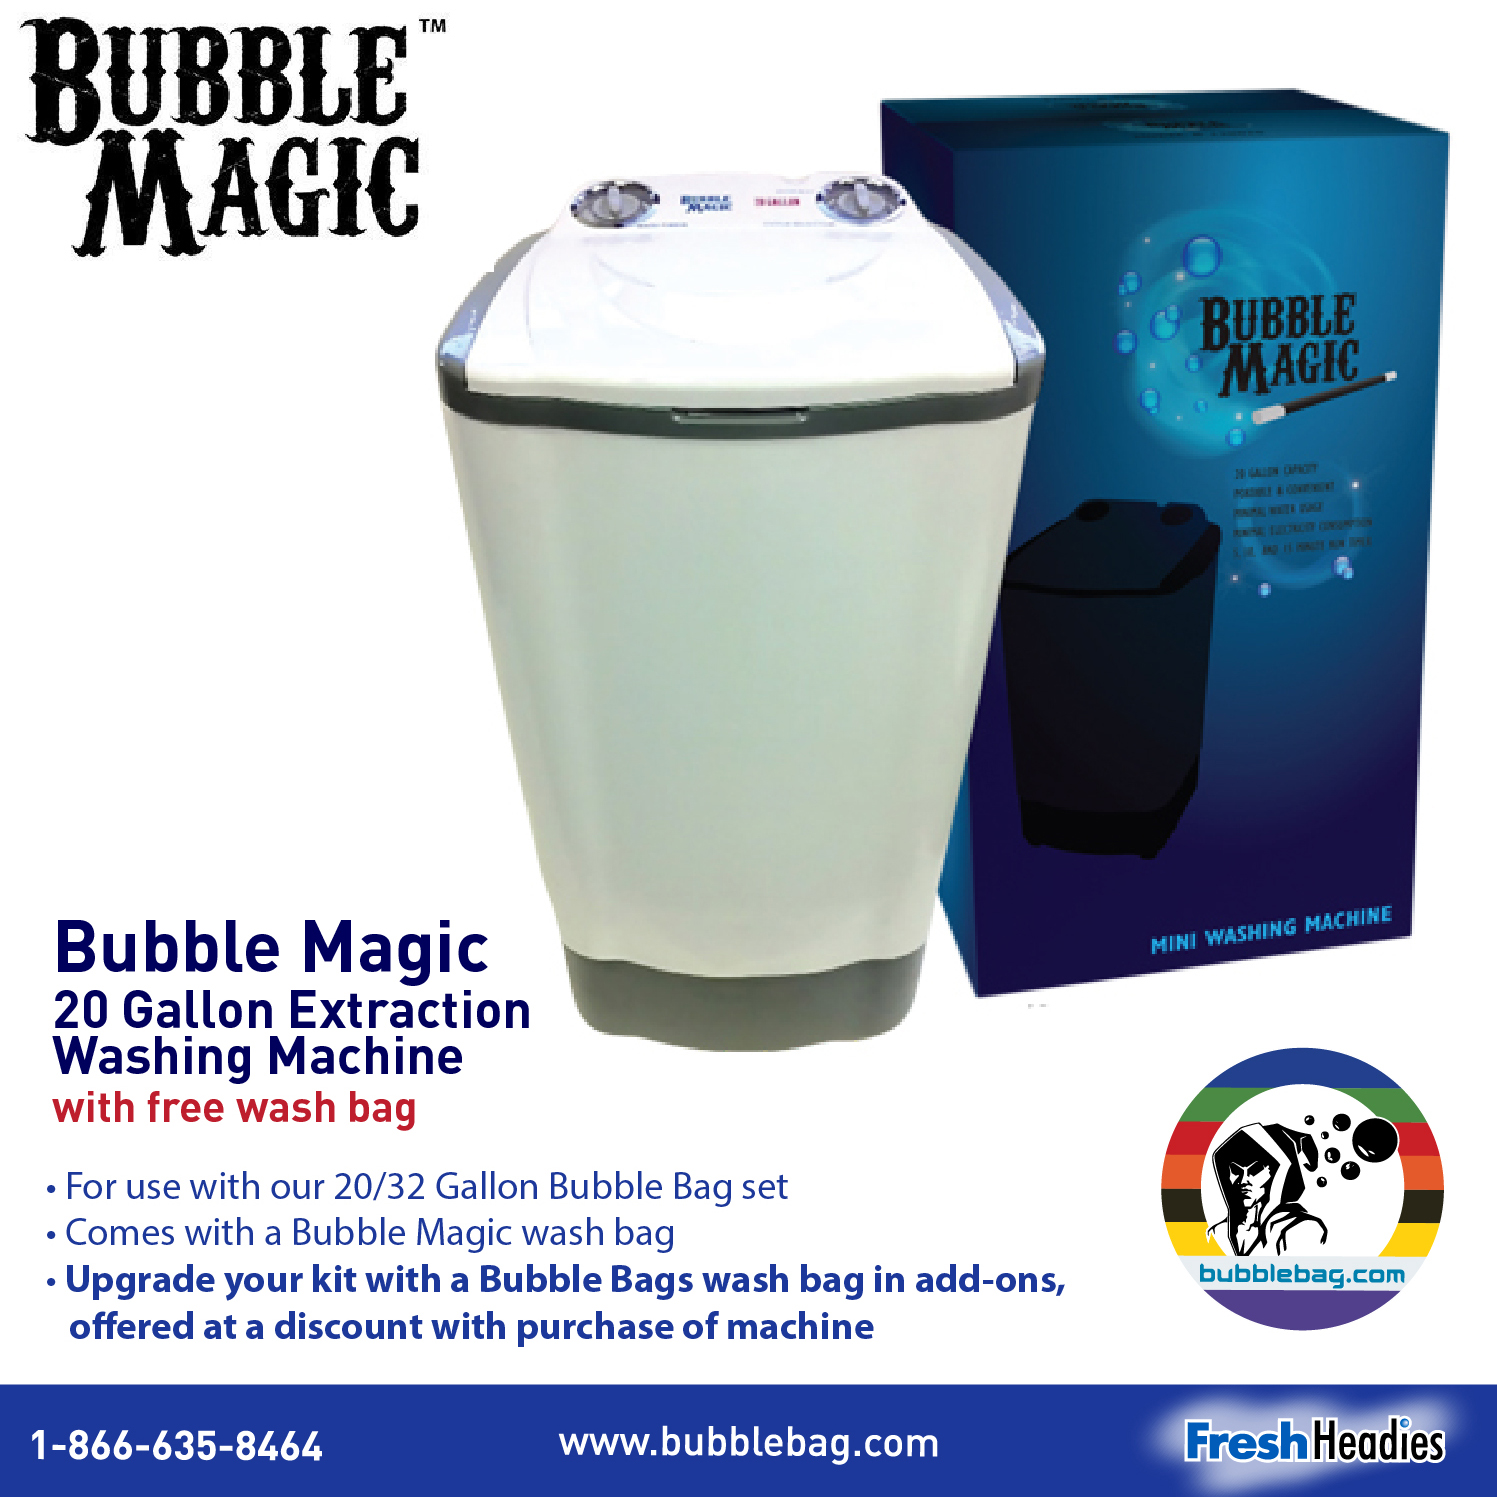 Bubble Magic 20 Gallon Extraction Washing Machine